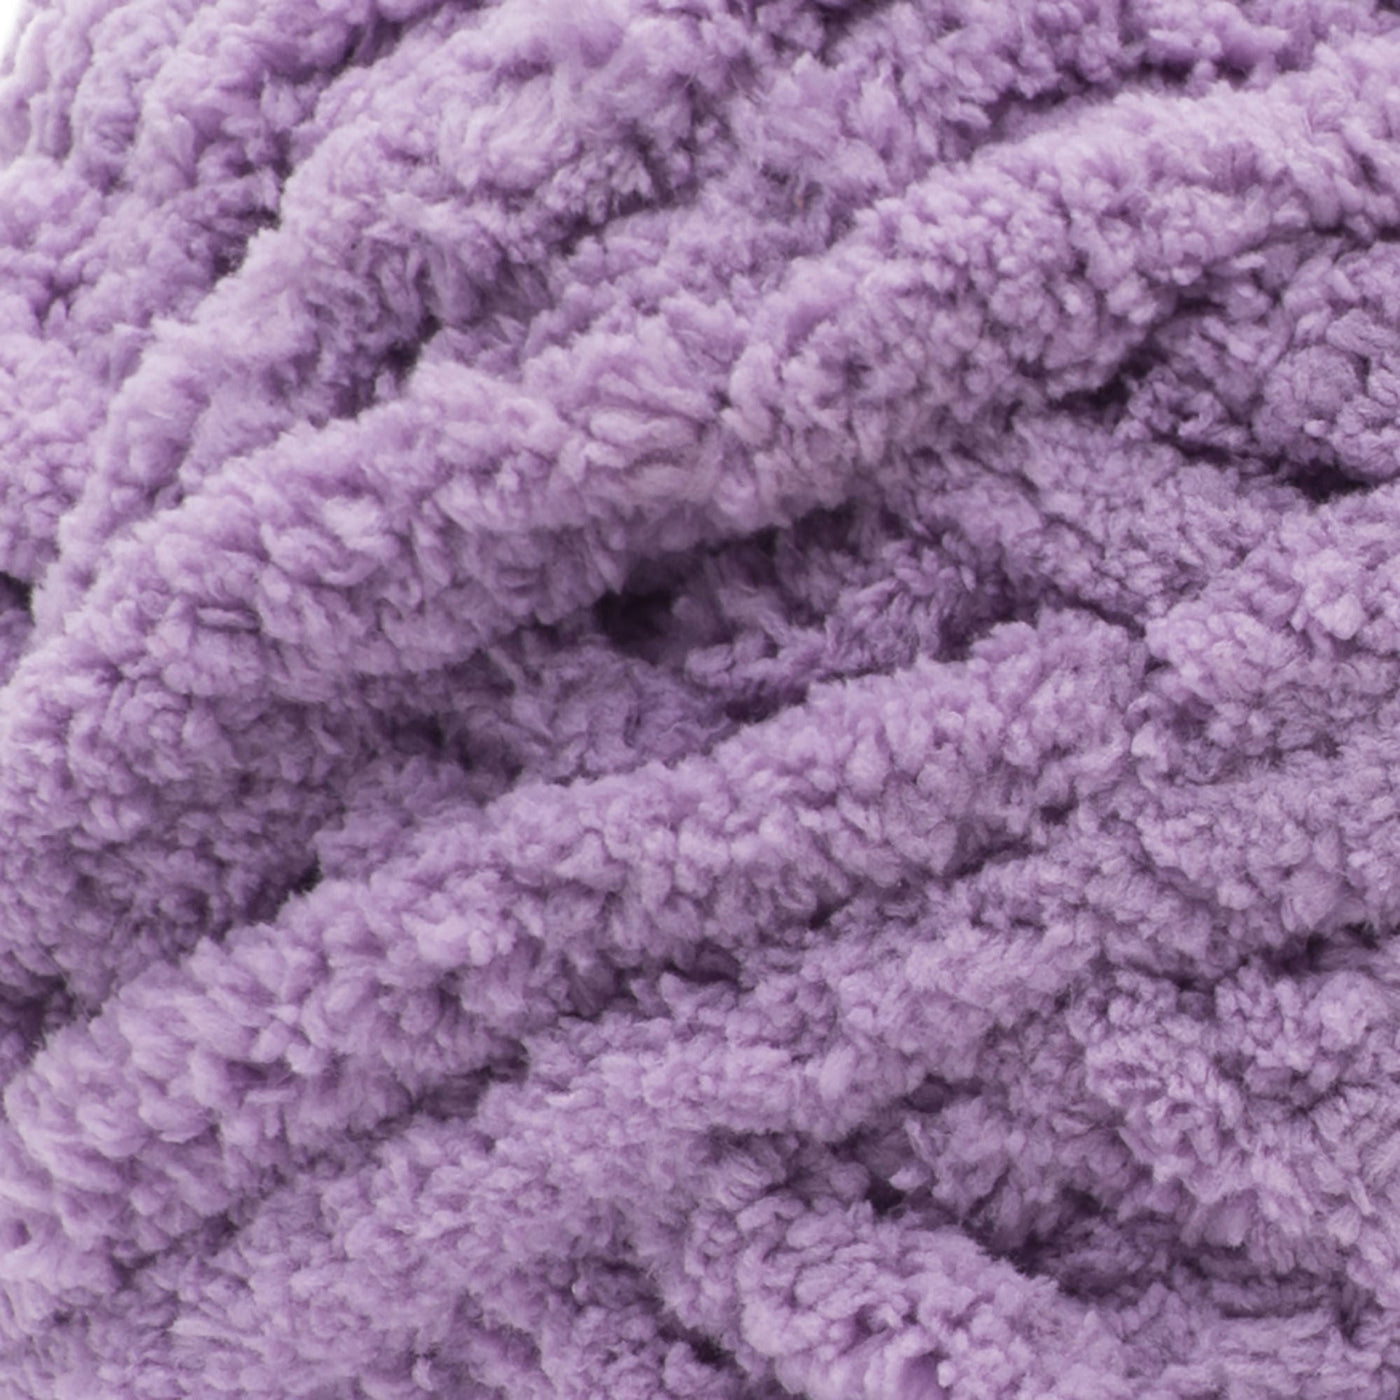 Bernat Blanket Extra - Mega Chunky 300g Yarn